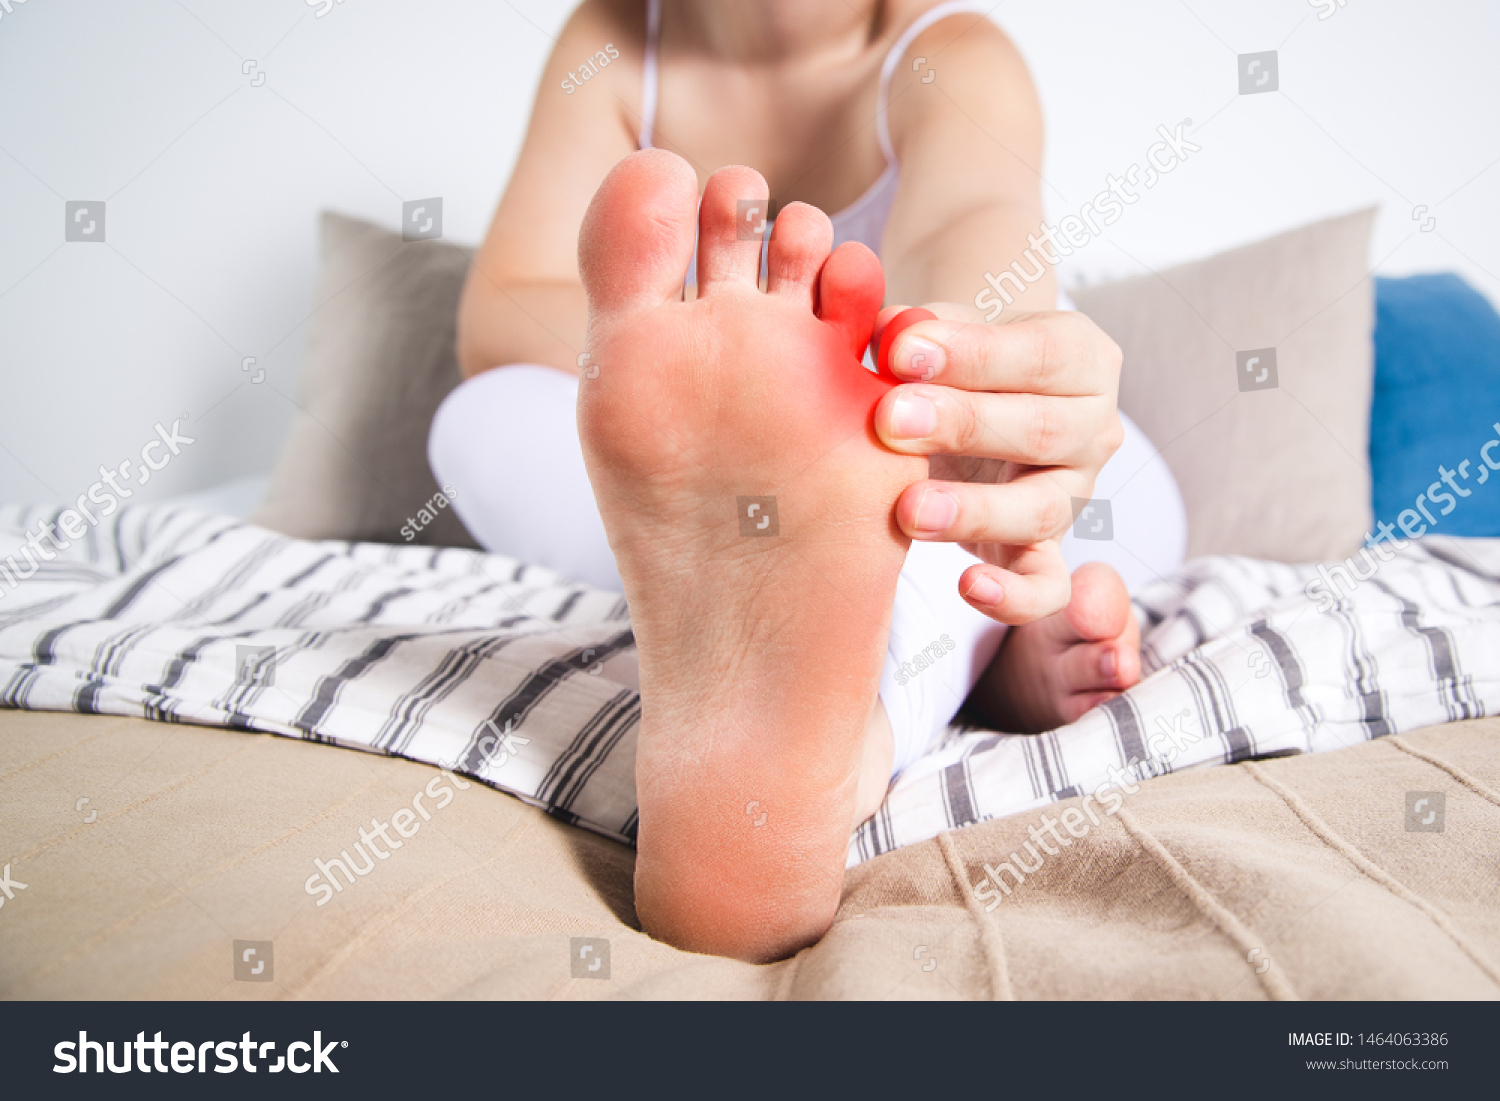 foot massage at home